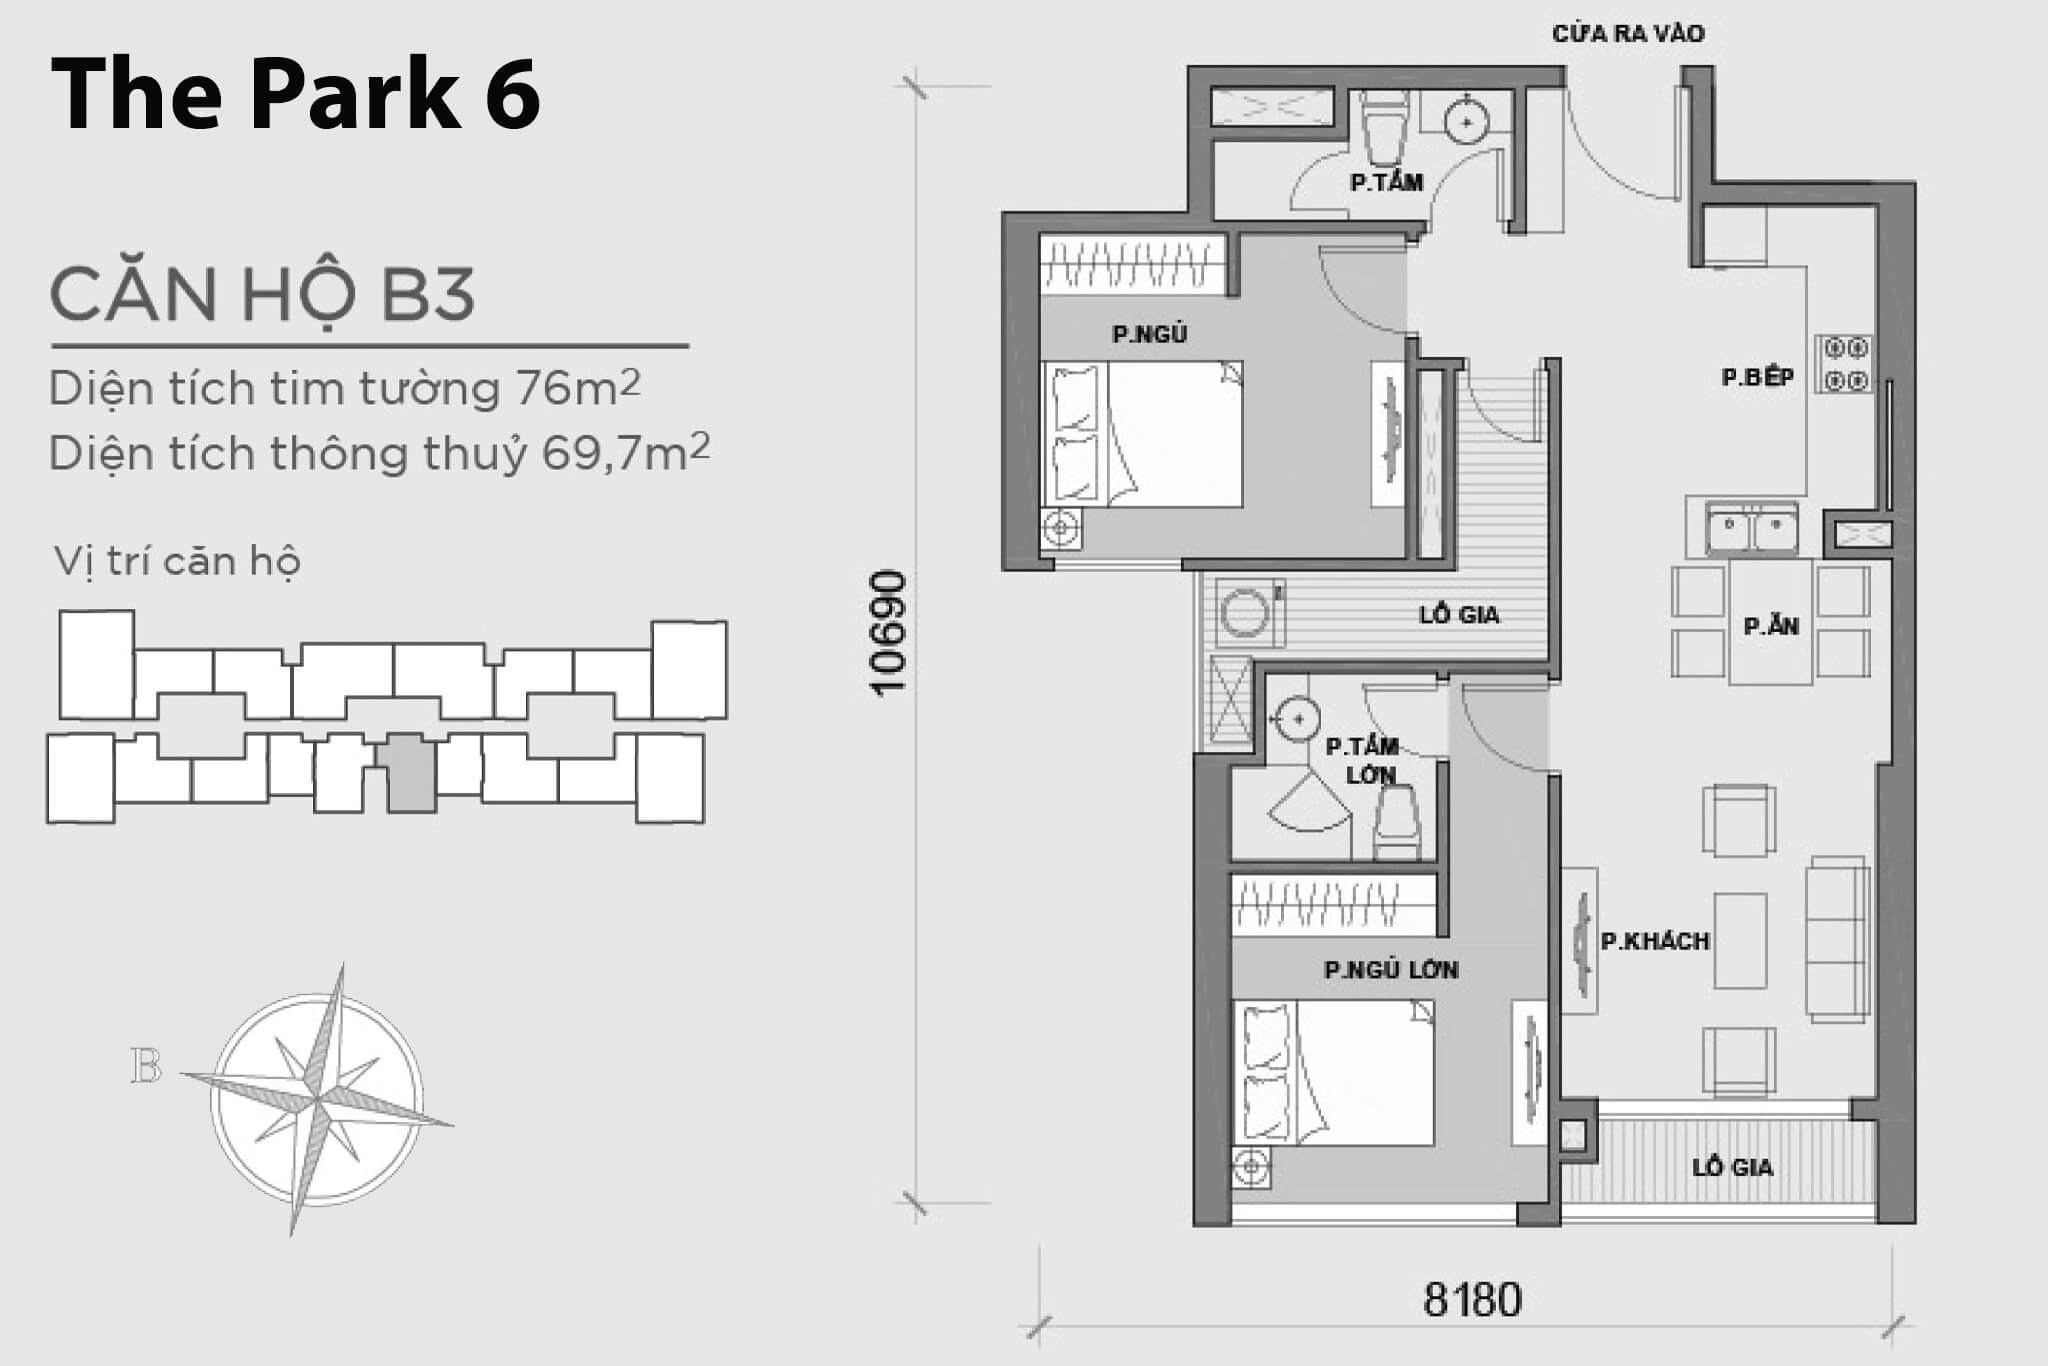 Layout căn hộ số 03 tòa The Park 6B - Mặt bằng Vinhomes Central Park